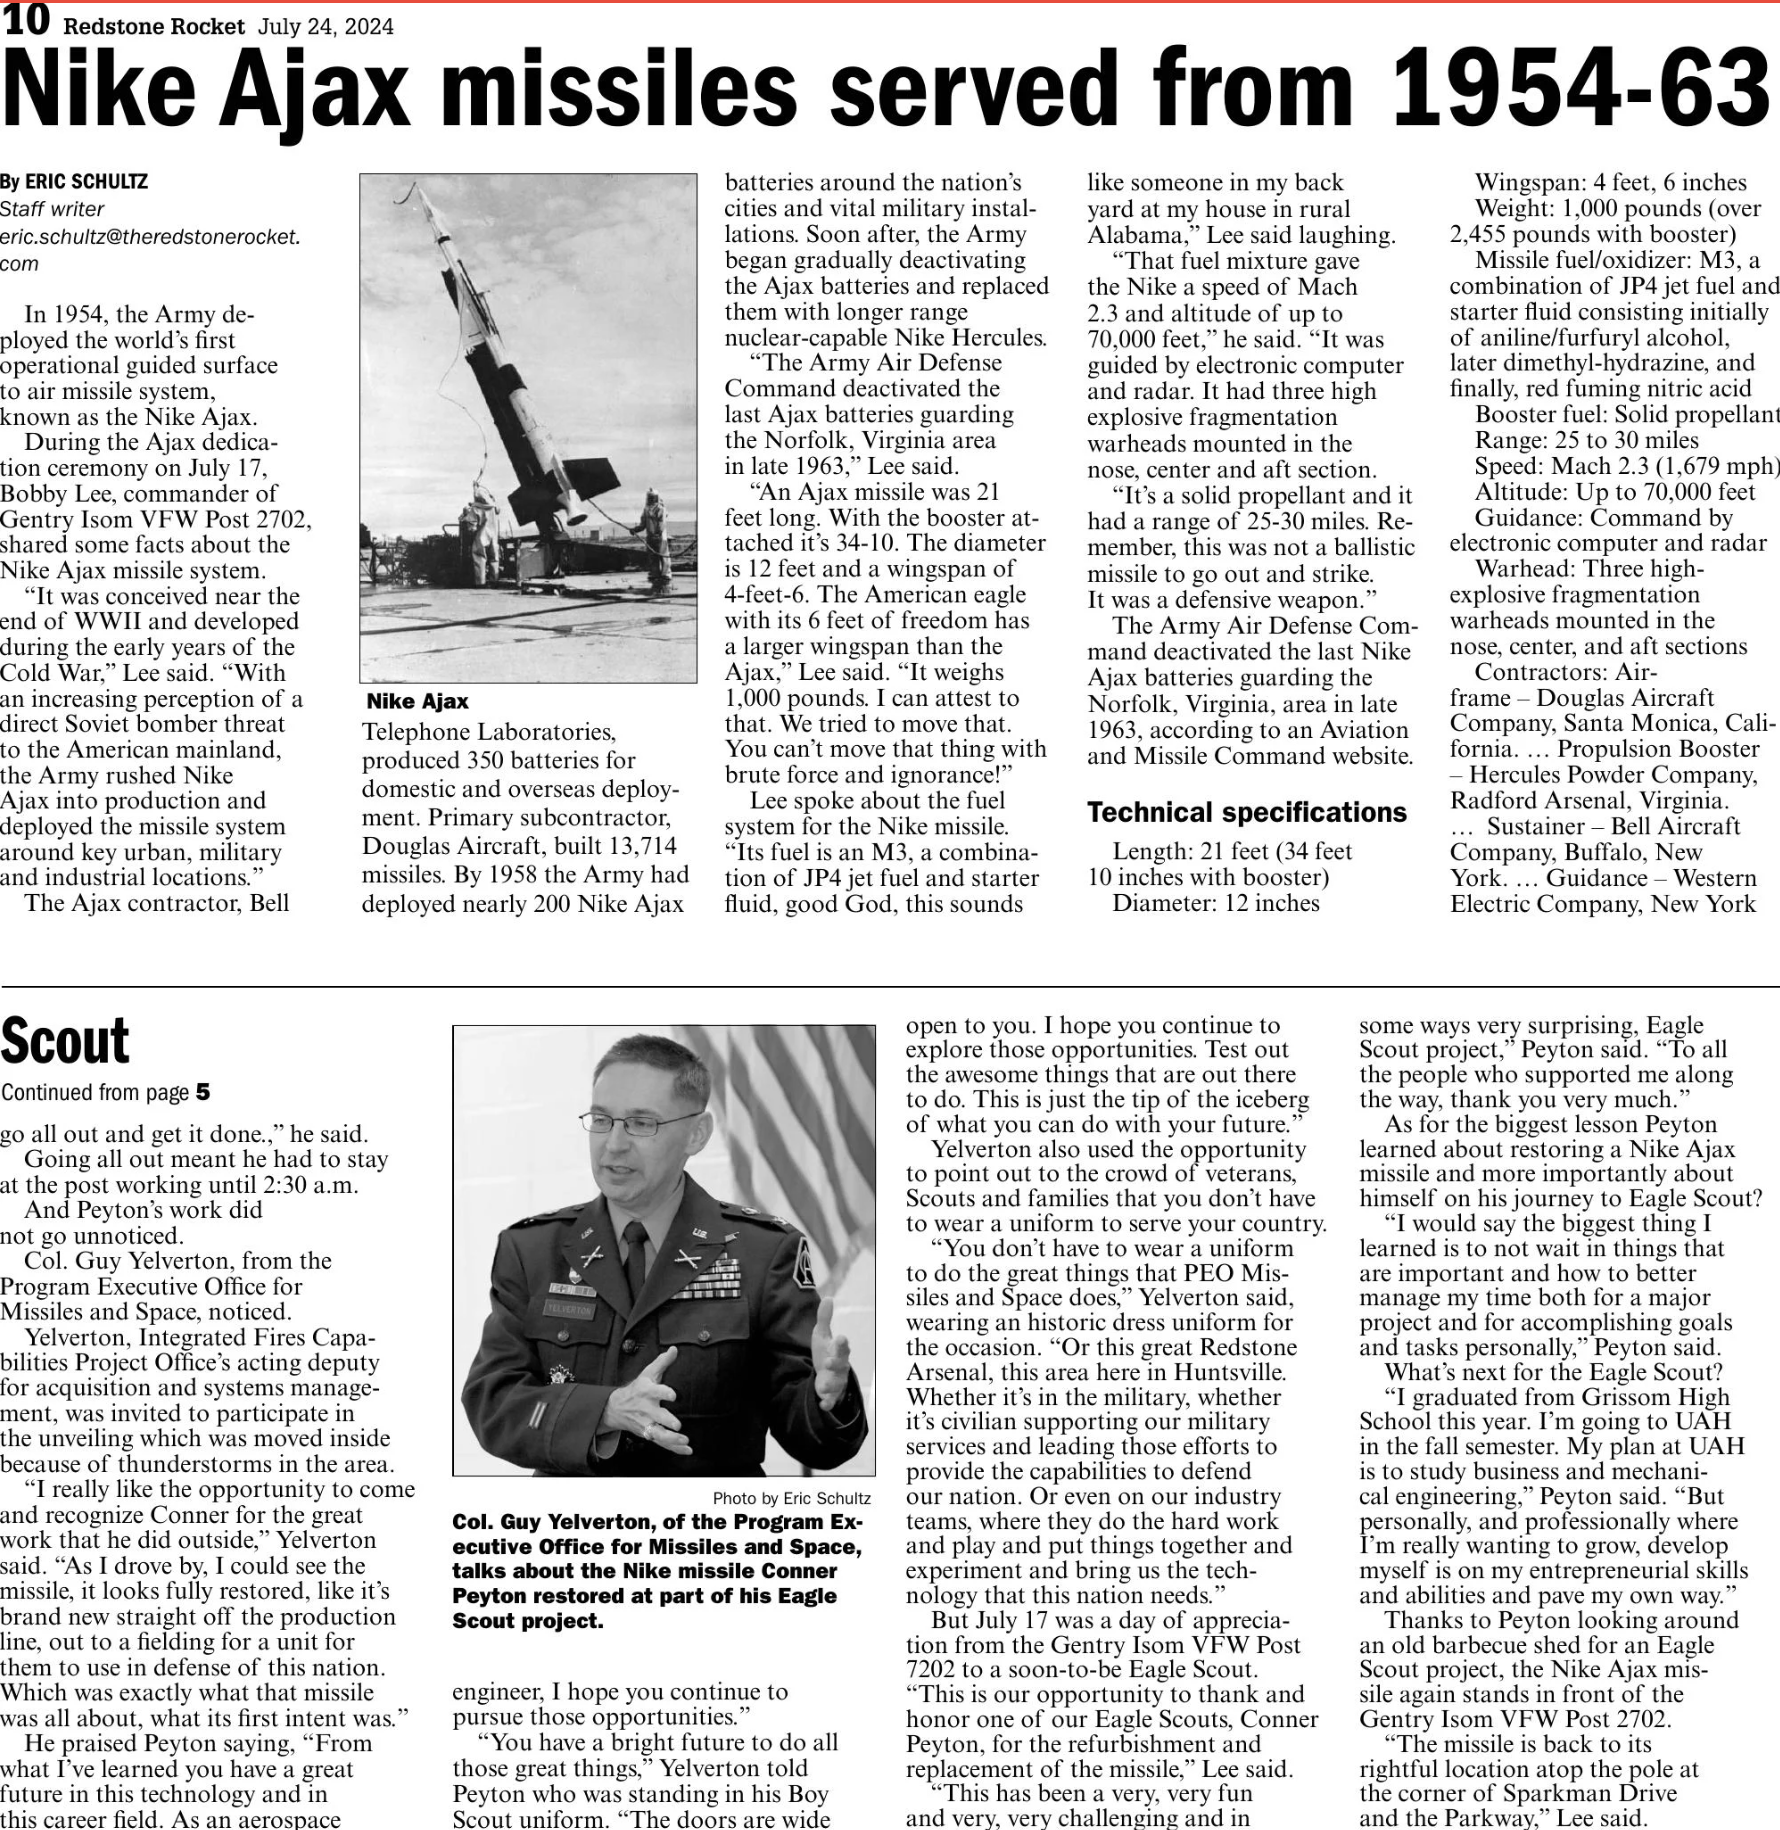 Nike Ajax Missile Article Page 2